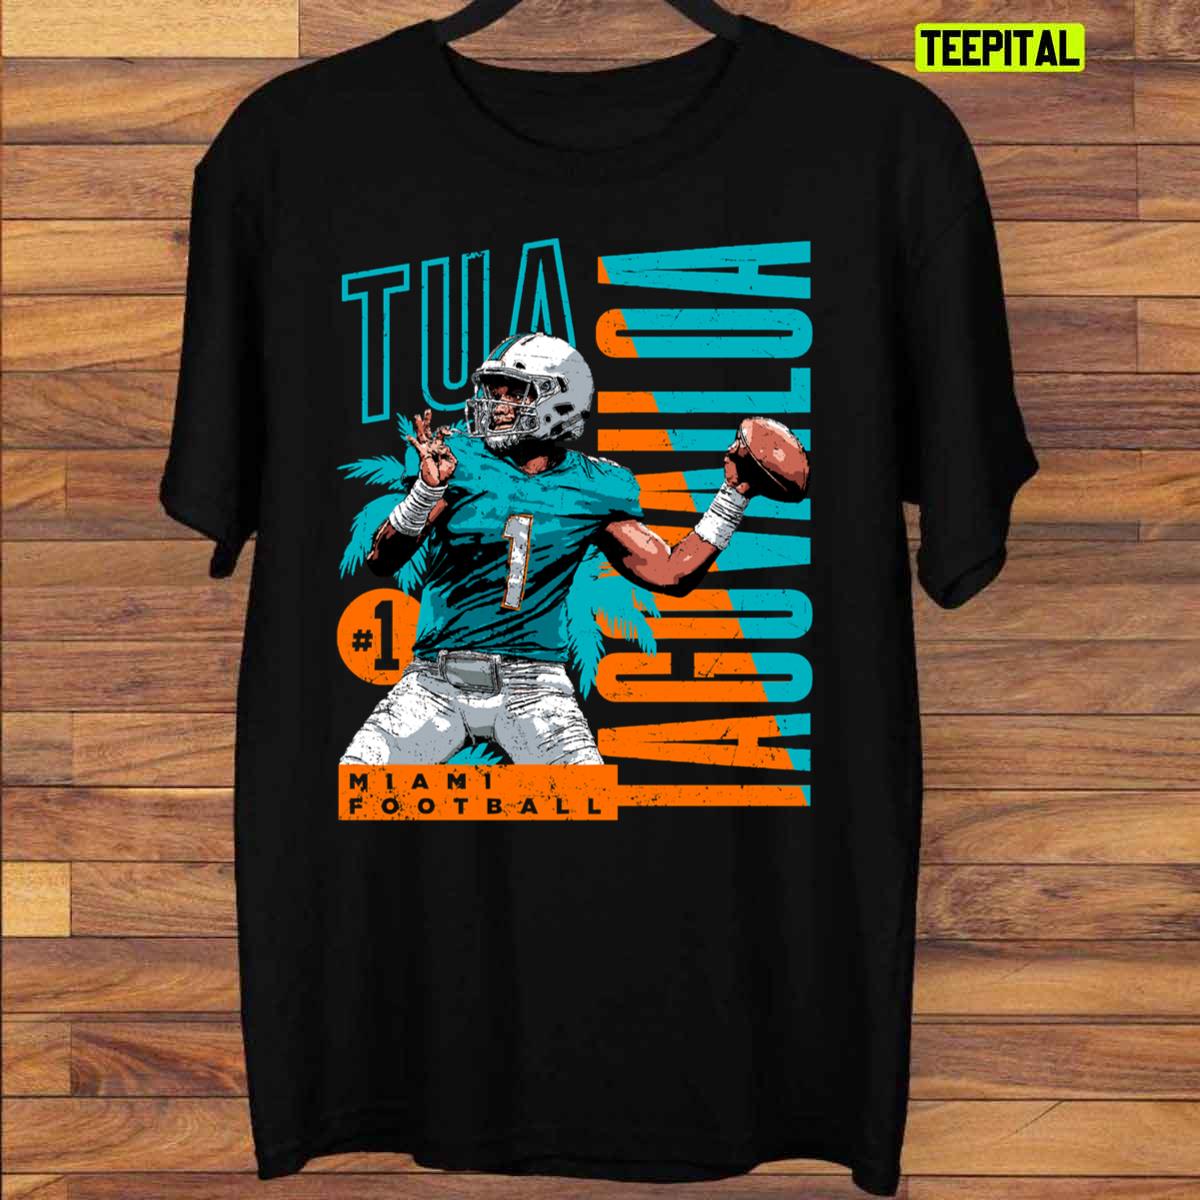 Tagovailoa Quarterback Miami Football T-Shirt